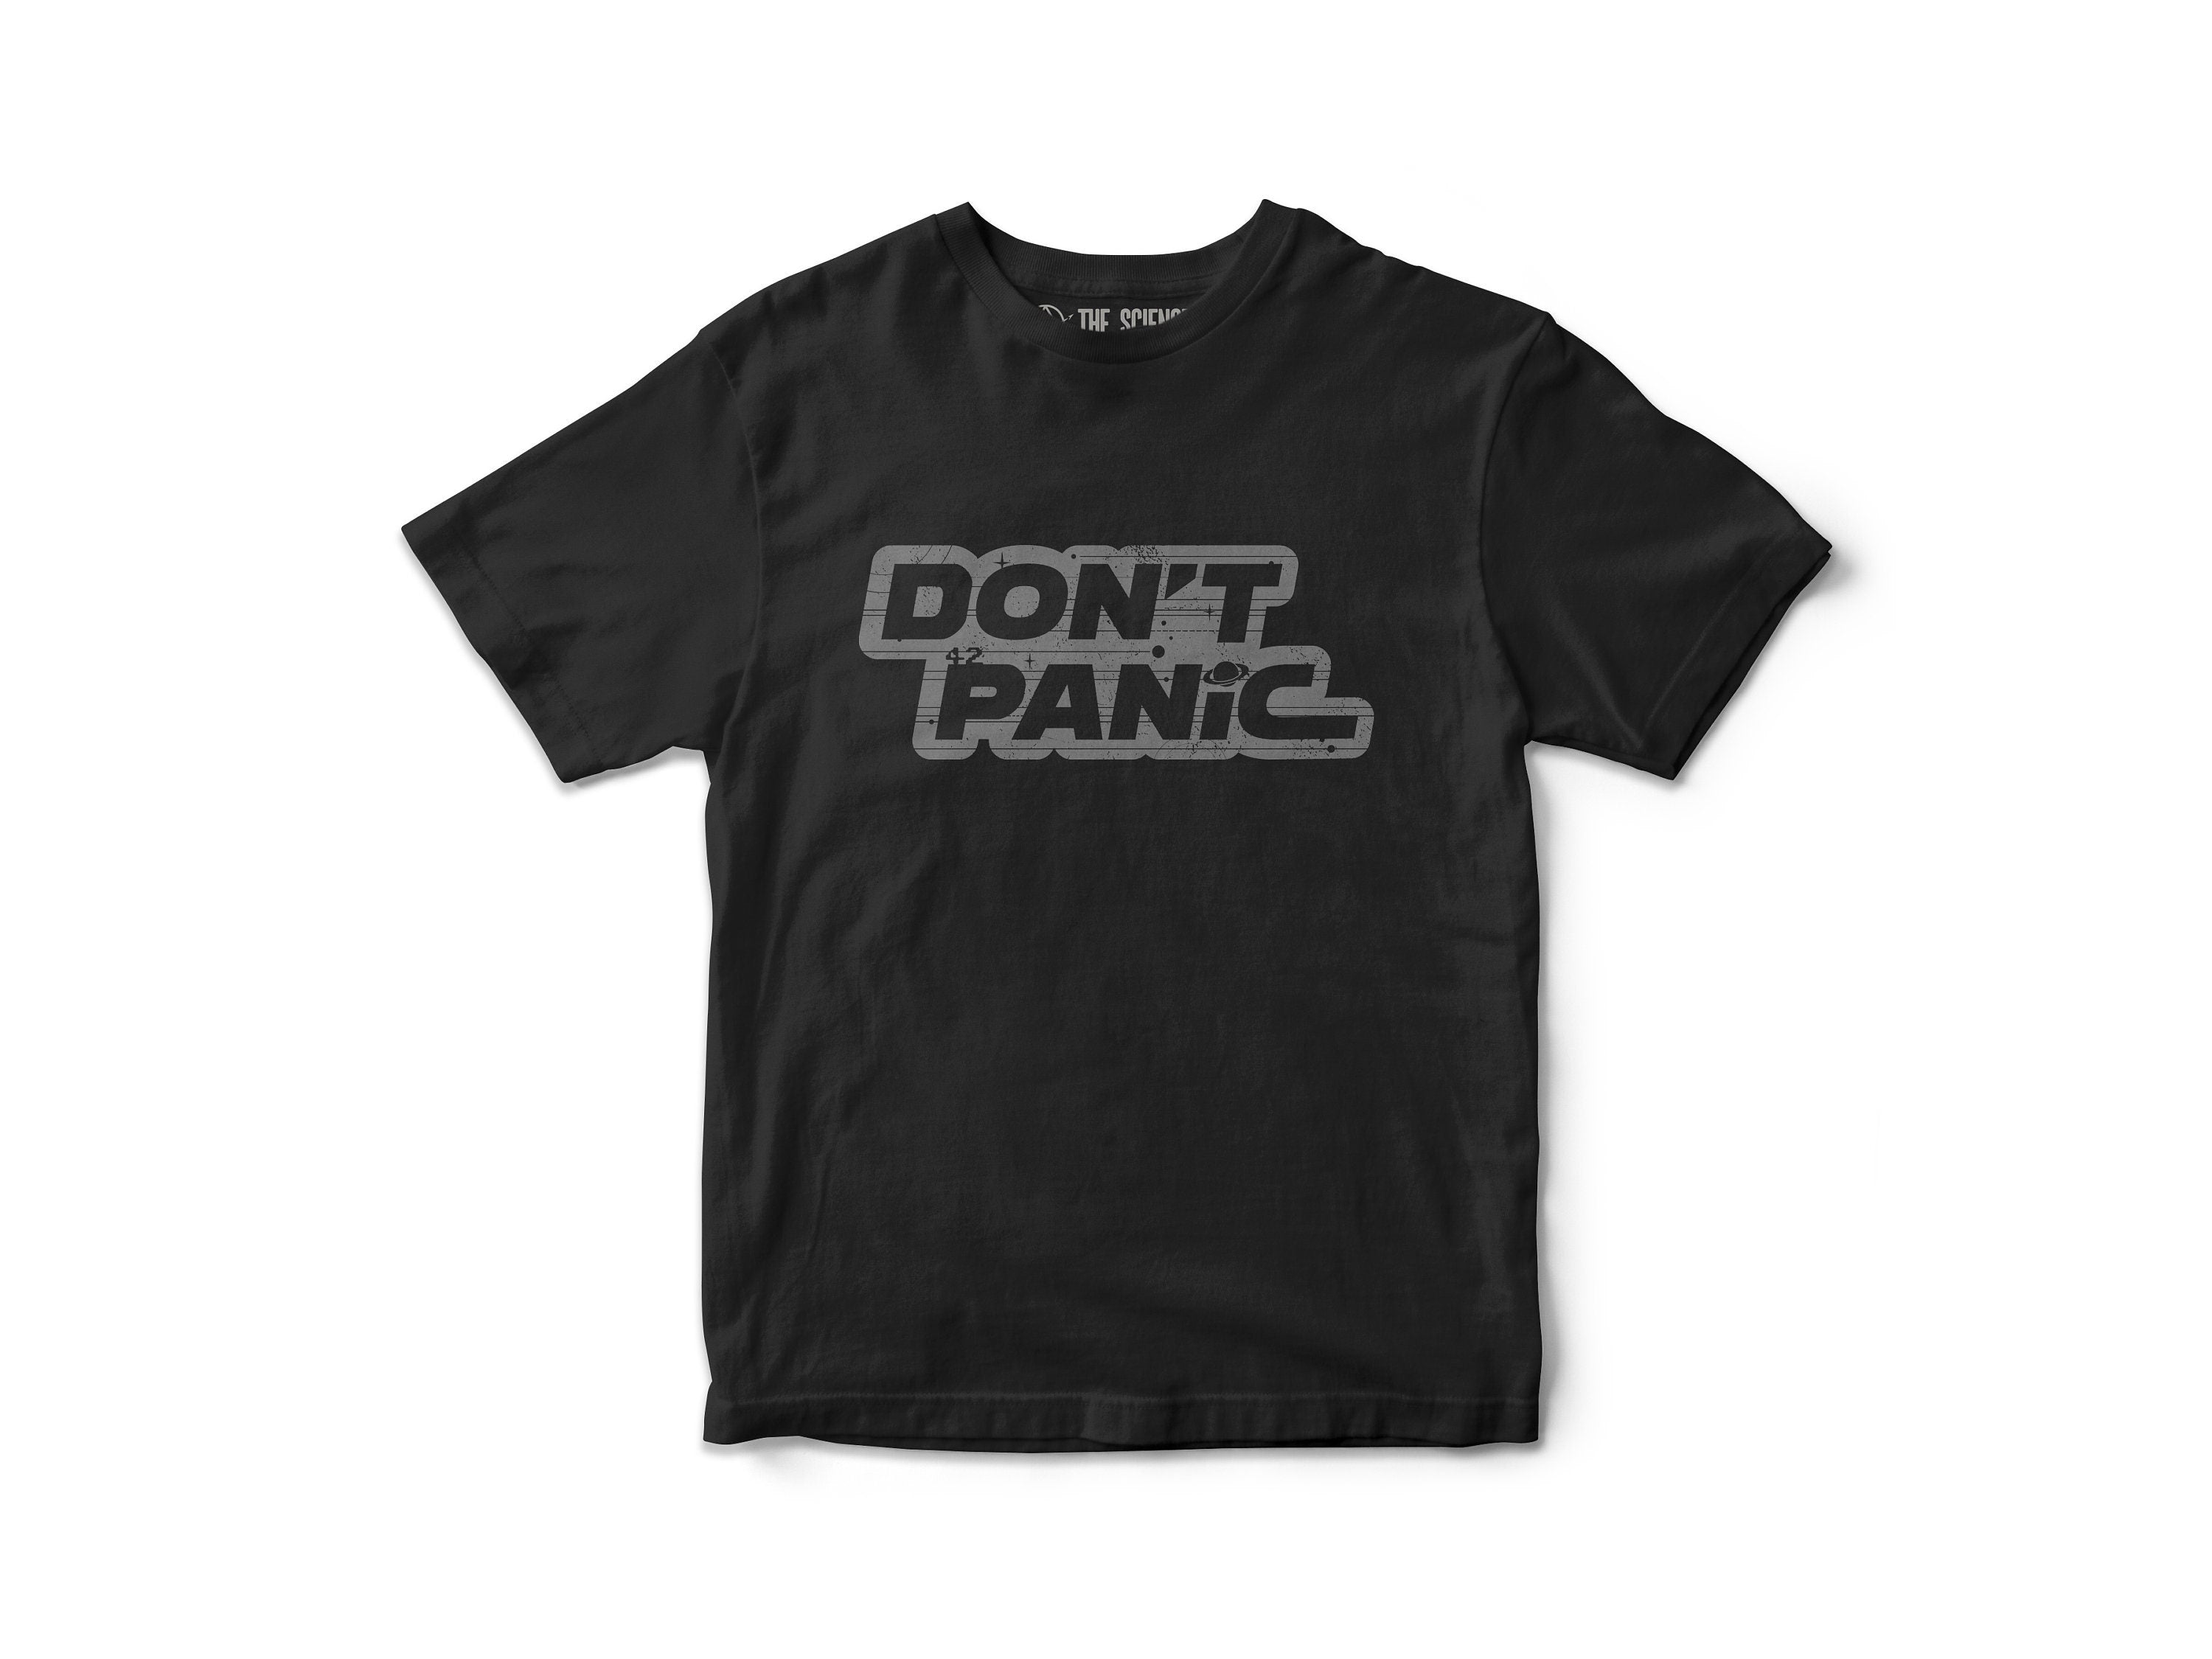 Don't Panic T-Shirt - Hitchhikers Guide Tee - HHGTTG - Sci-fi Futuristic /Cyberpunk Apparel